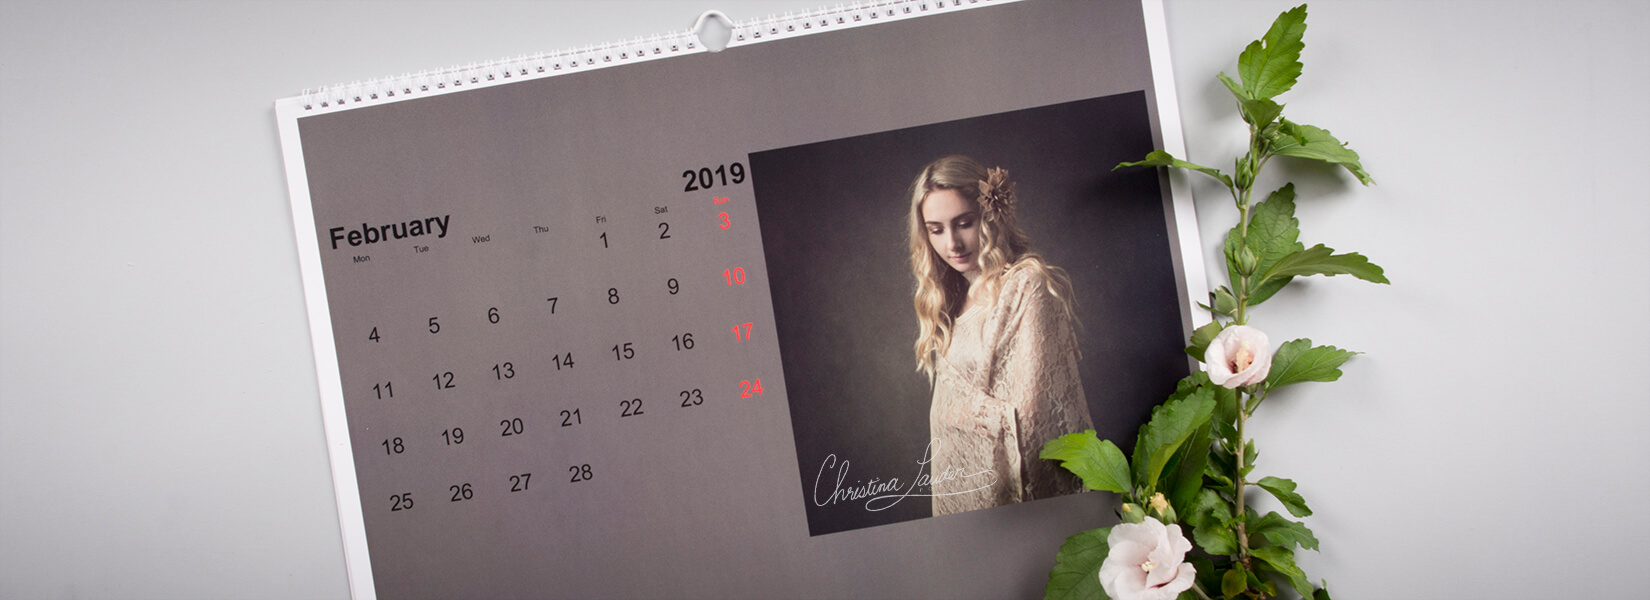 Calendar basic photo calendar professional print nphoto printing lab personalised calendar photographer